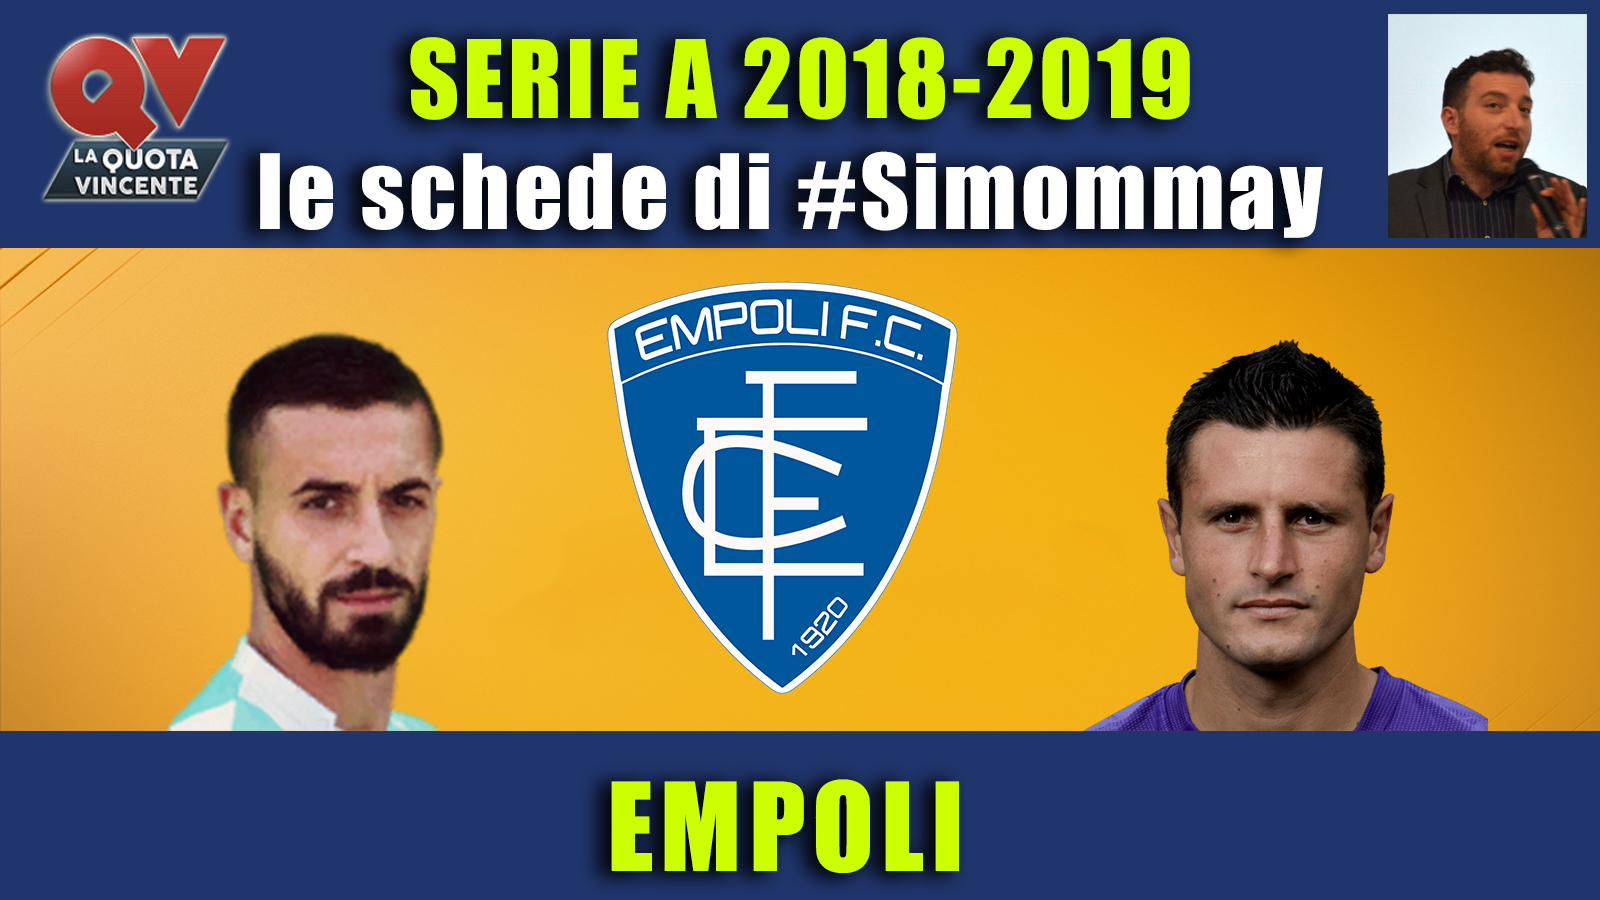 Guida Serie A 2018-2019 EMPOLI: l'onda lunga dell'entusiasmo